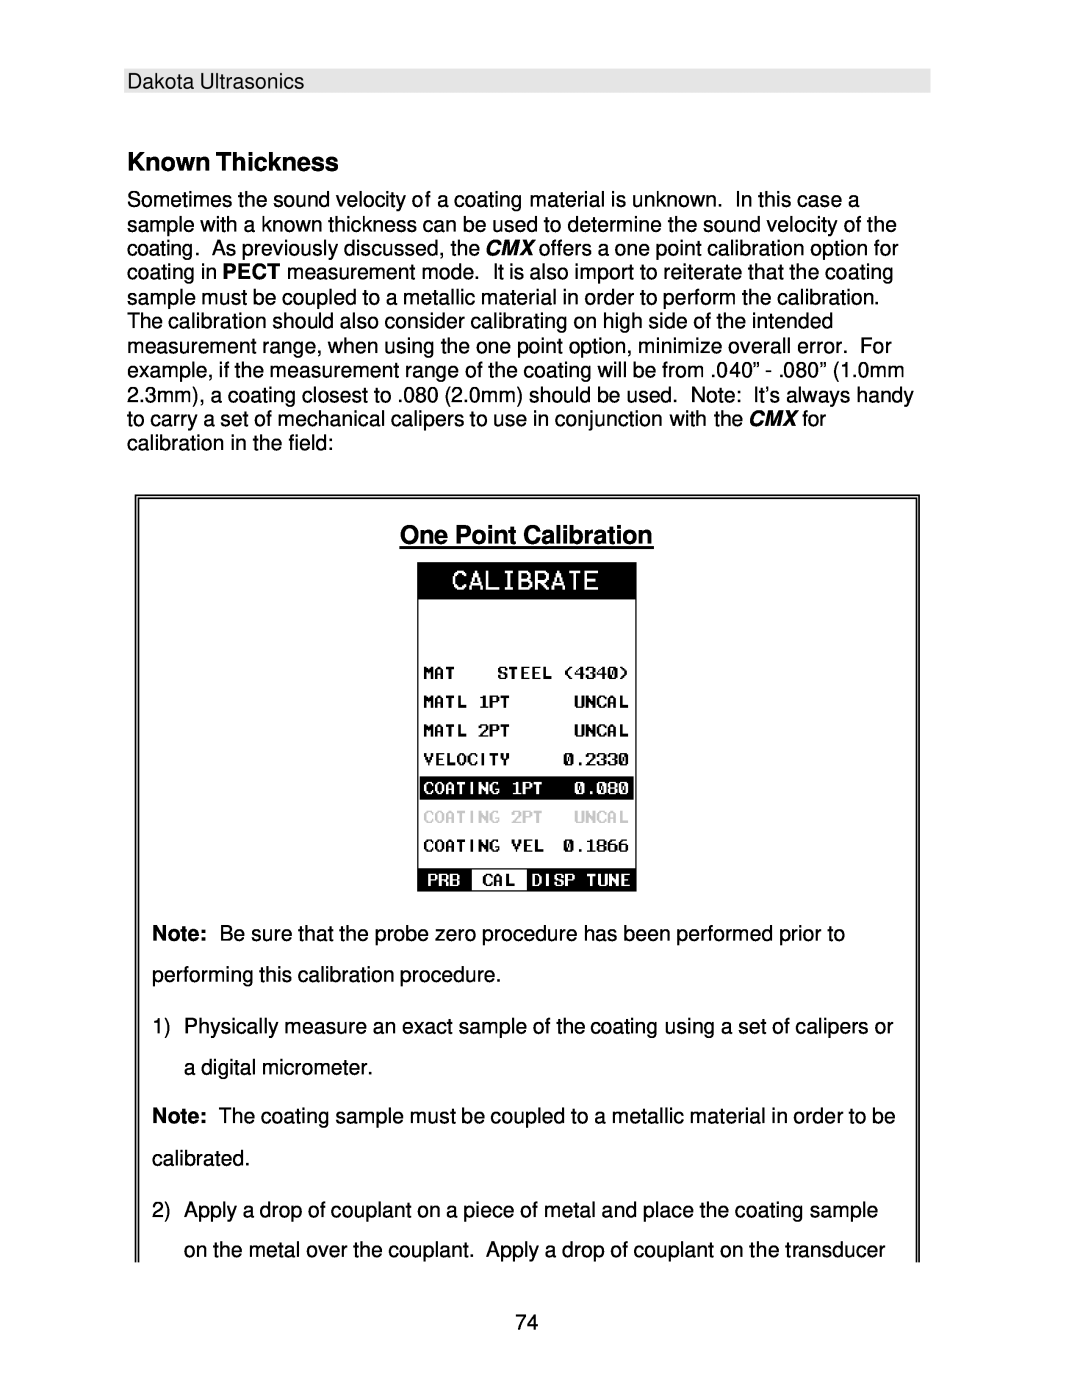 Dakota Digital CMX operation manual Known Thickness, One Point Calibration 